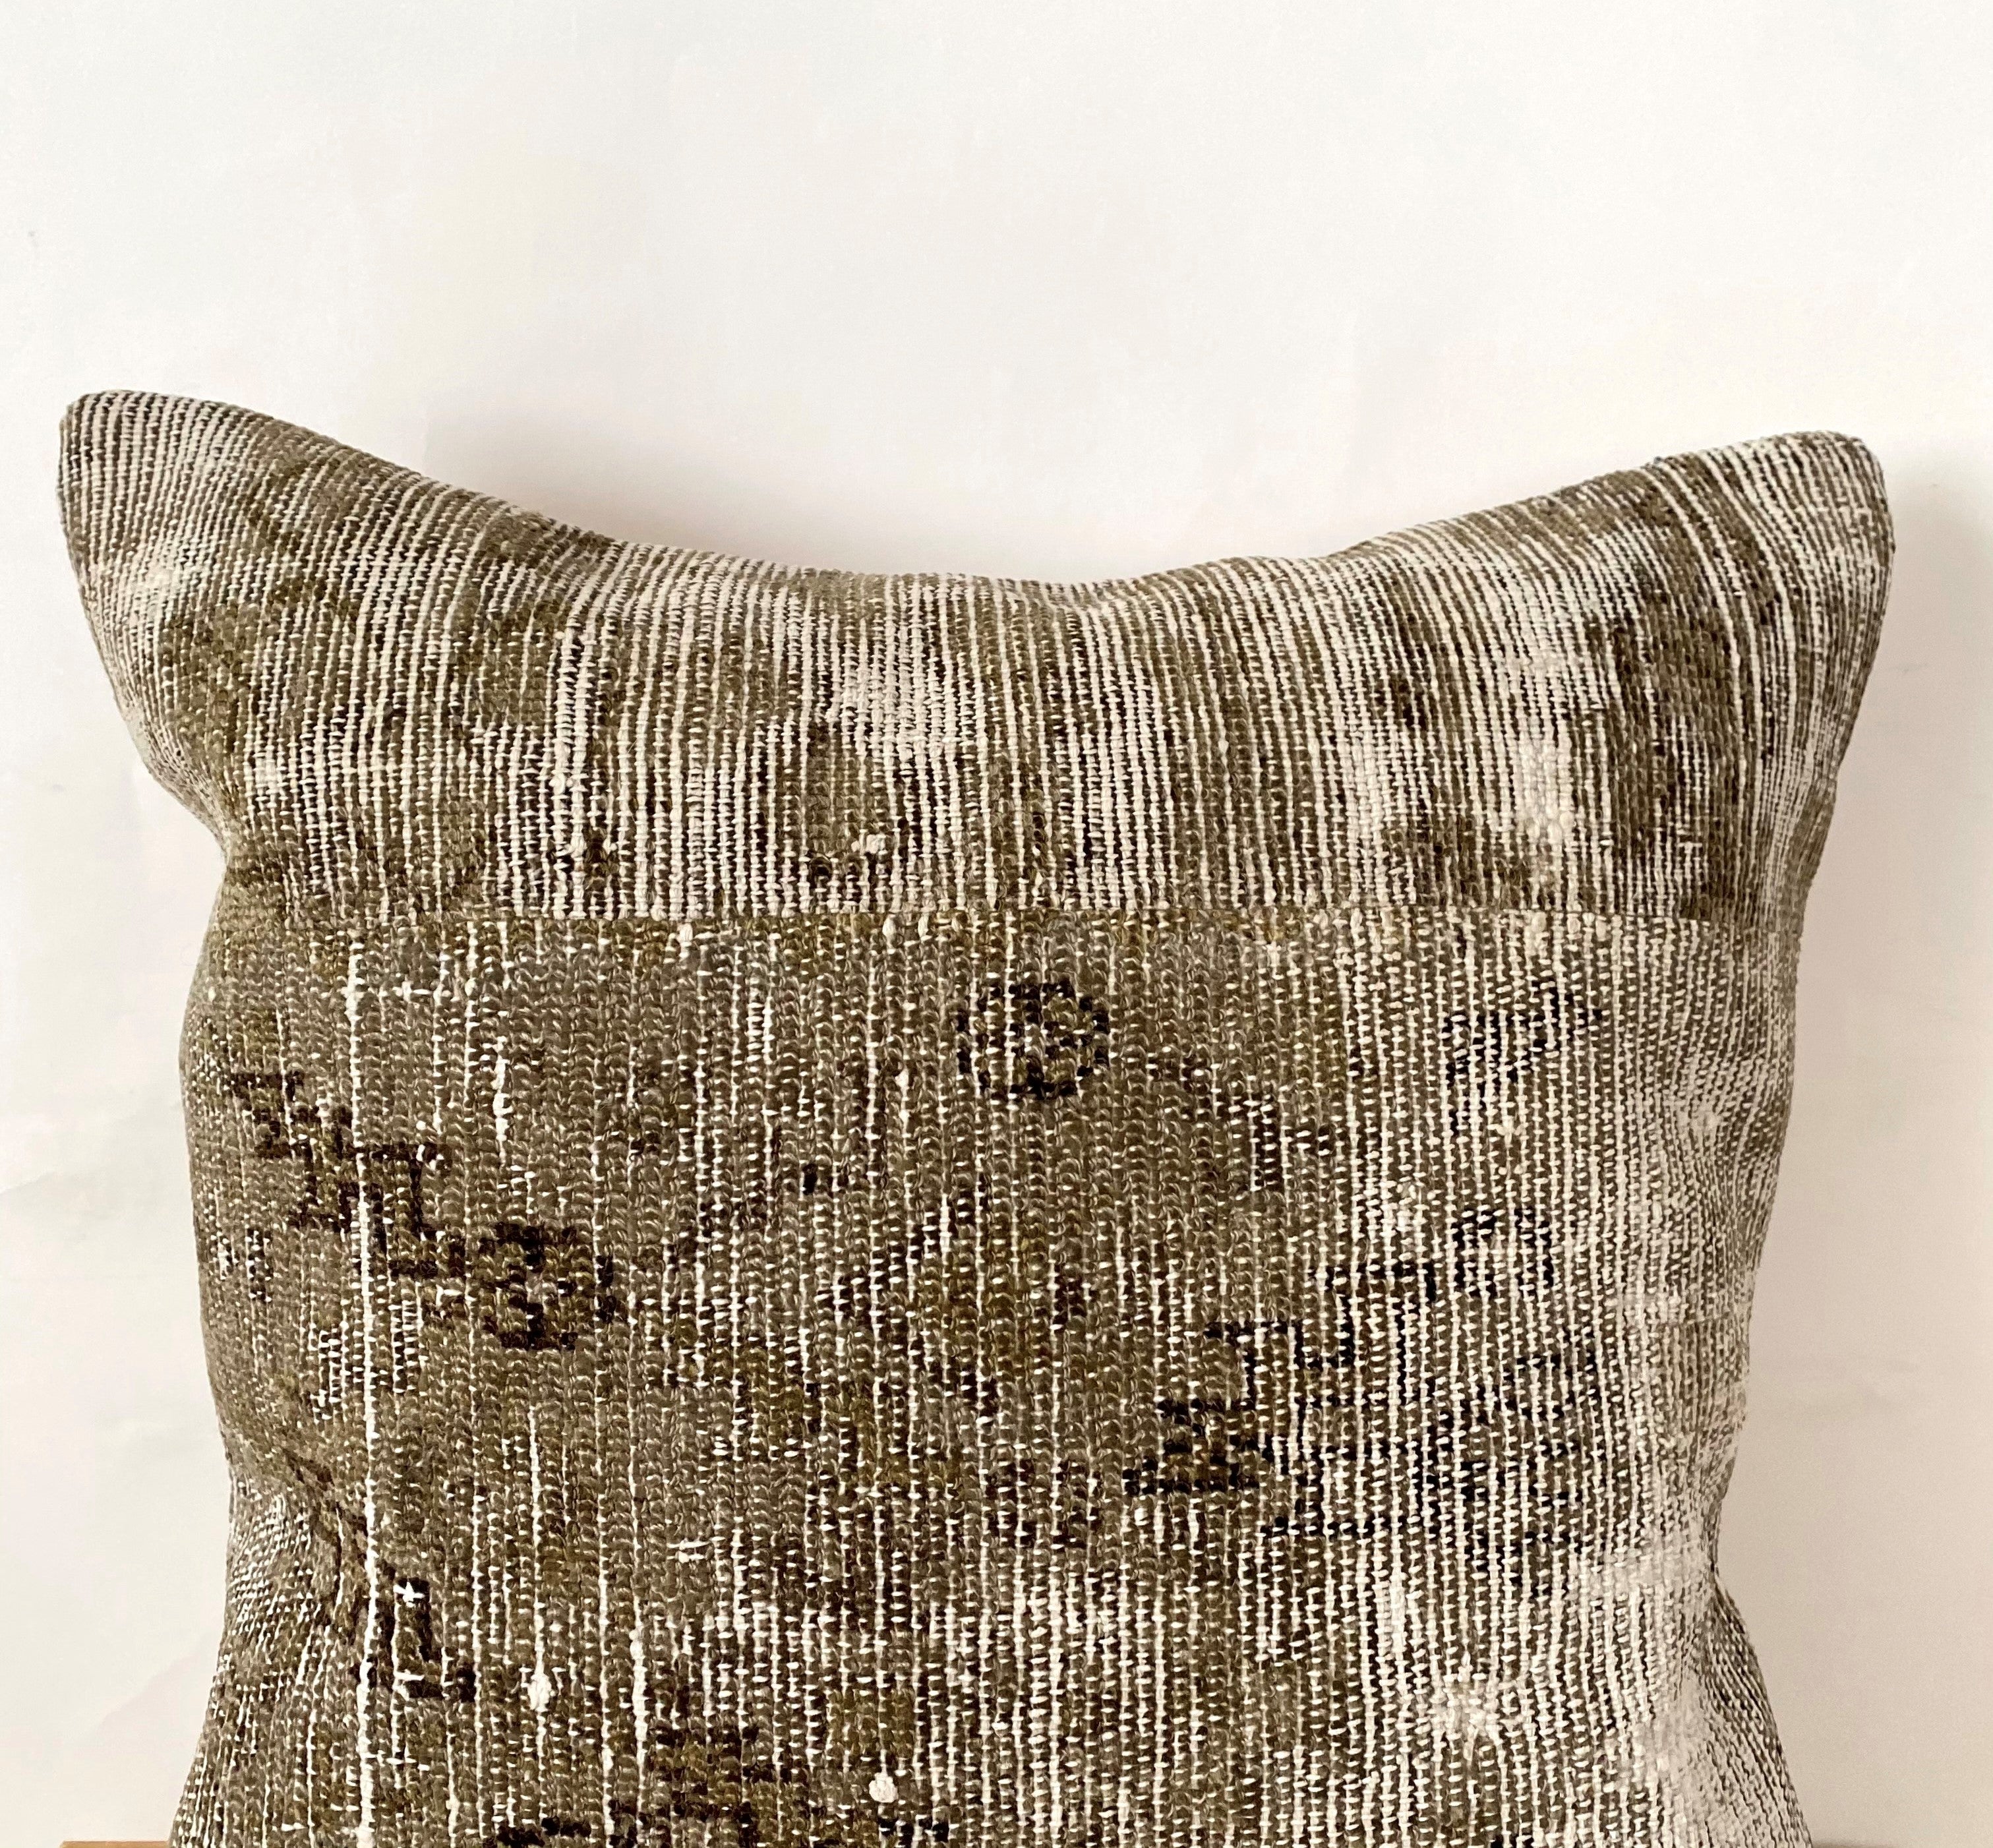 Hariel - Persian Pillow Cover - kudenrugs